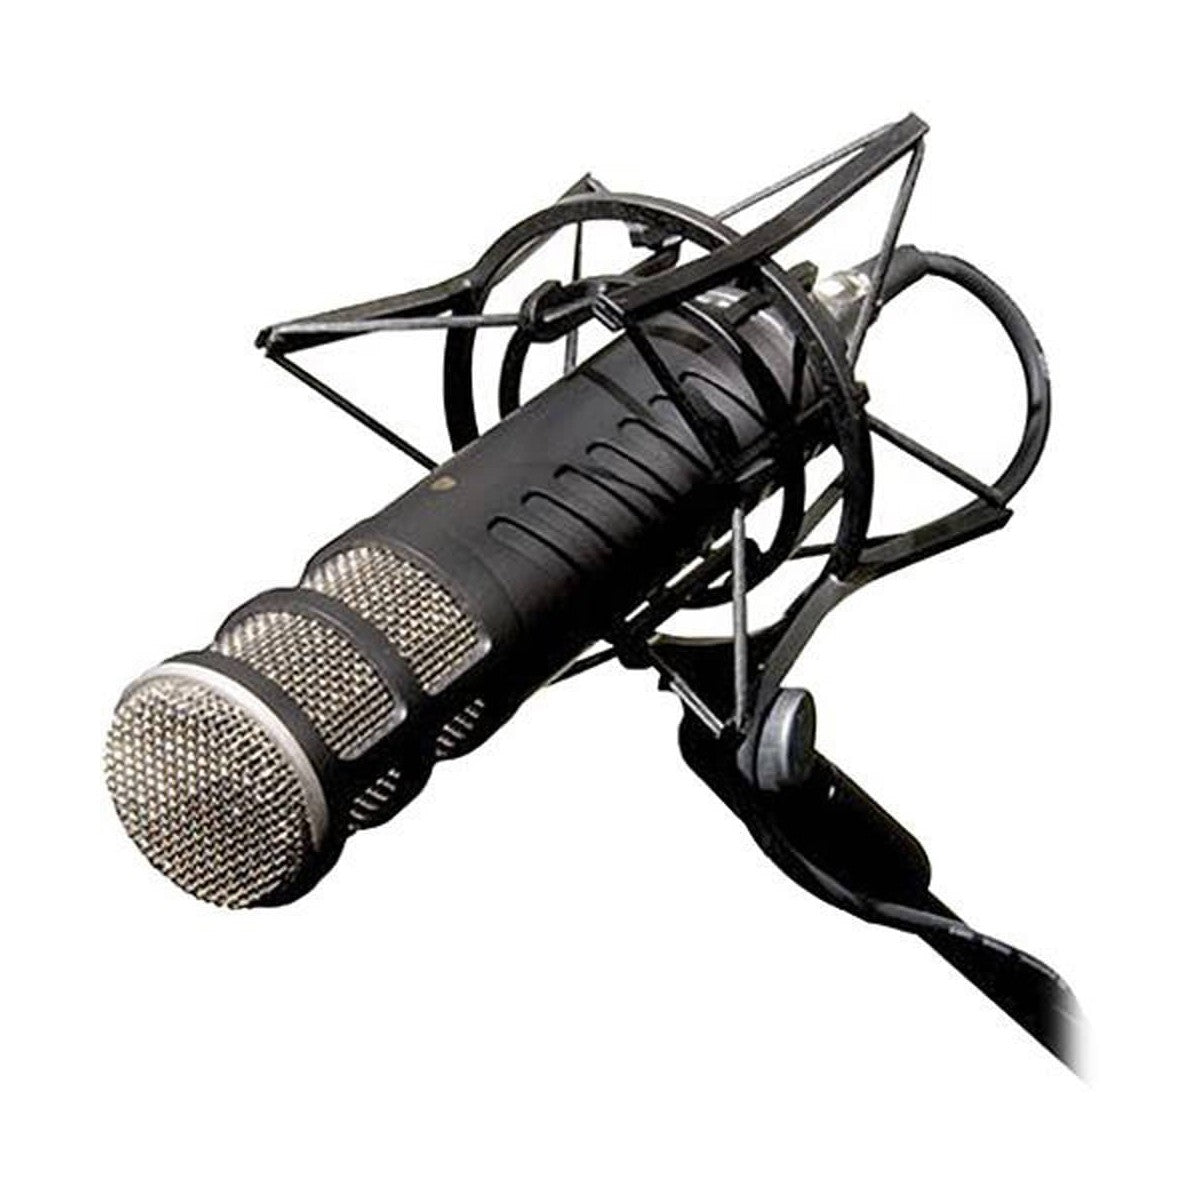 RØDE Procaster Broadcast Quality Dynamic Microphone